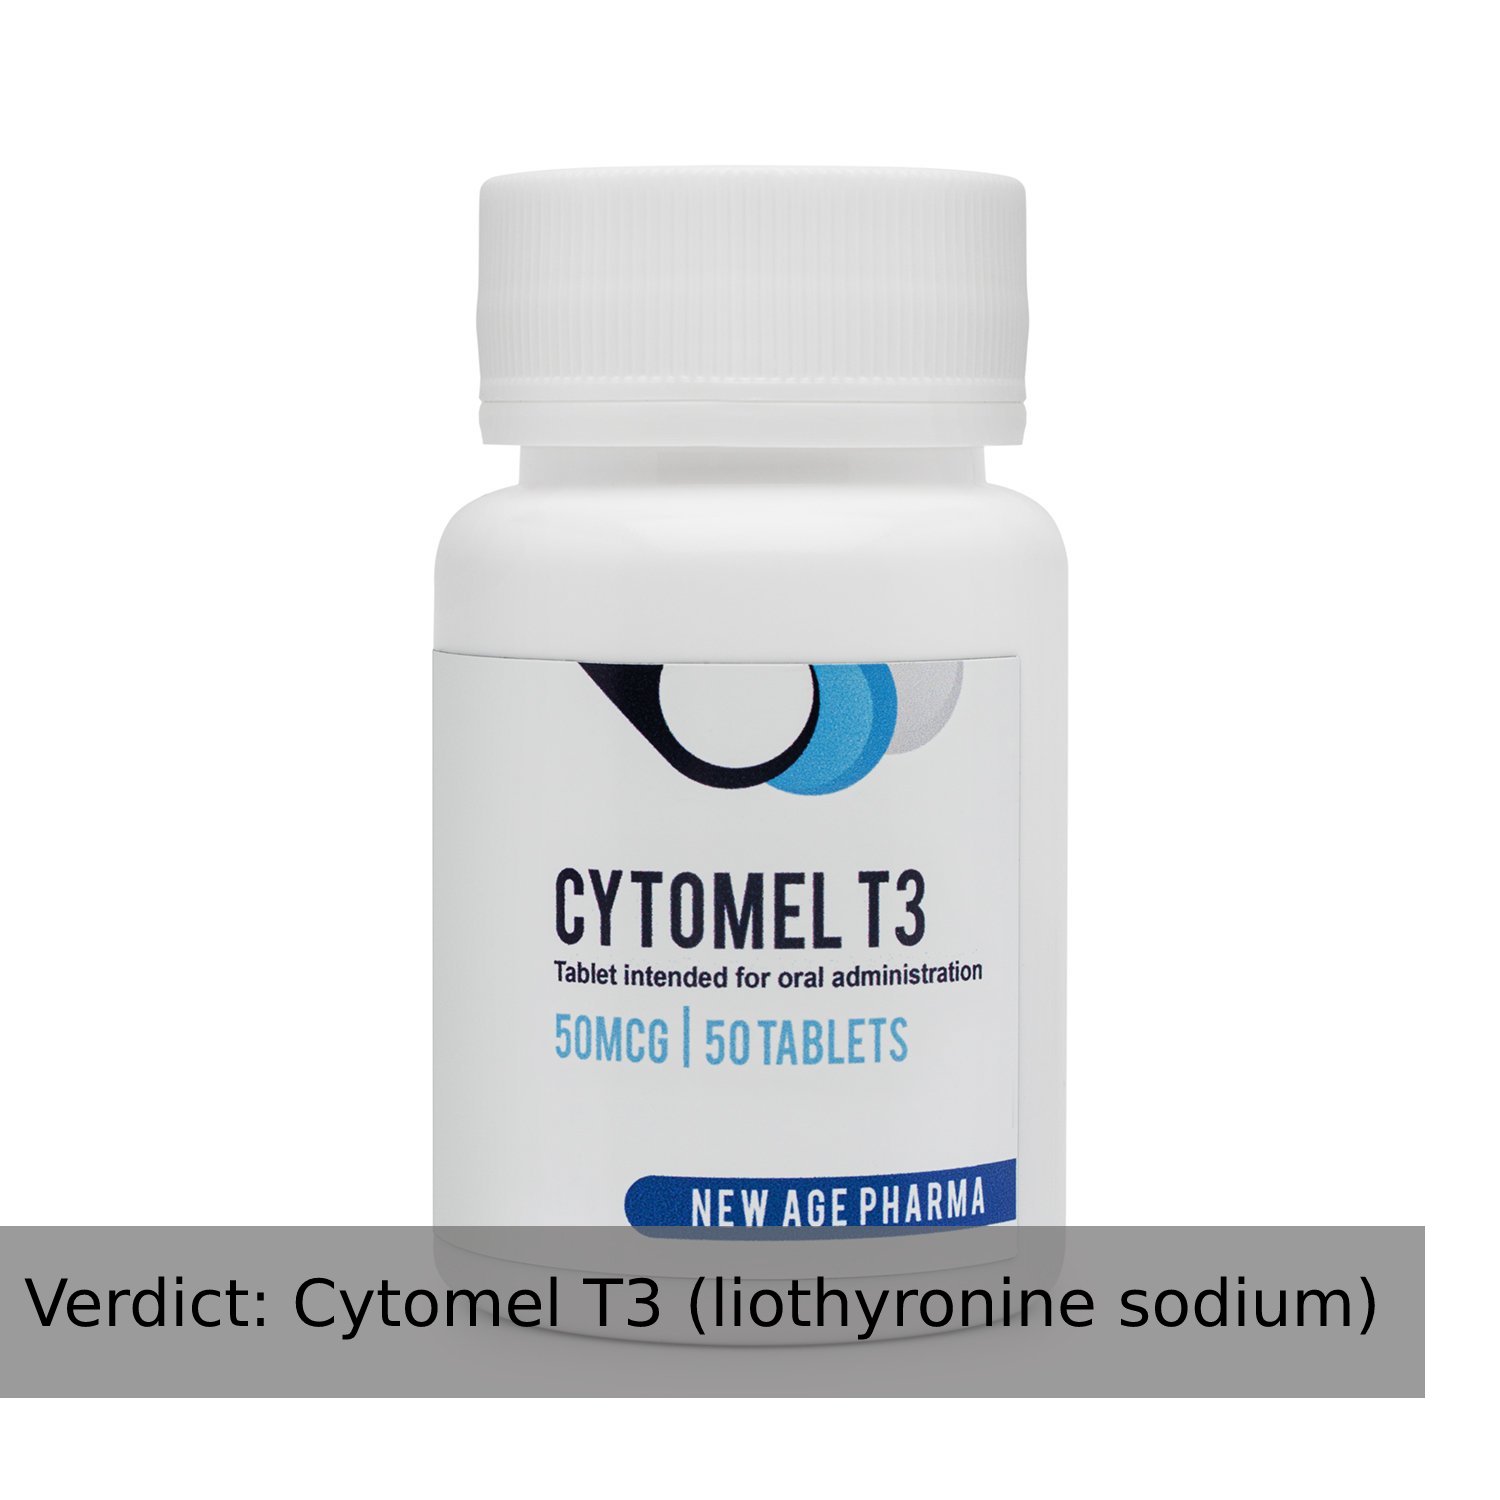 Verdict: Cytomel T3 (liothyronine sodium)